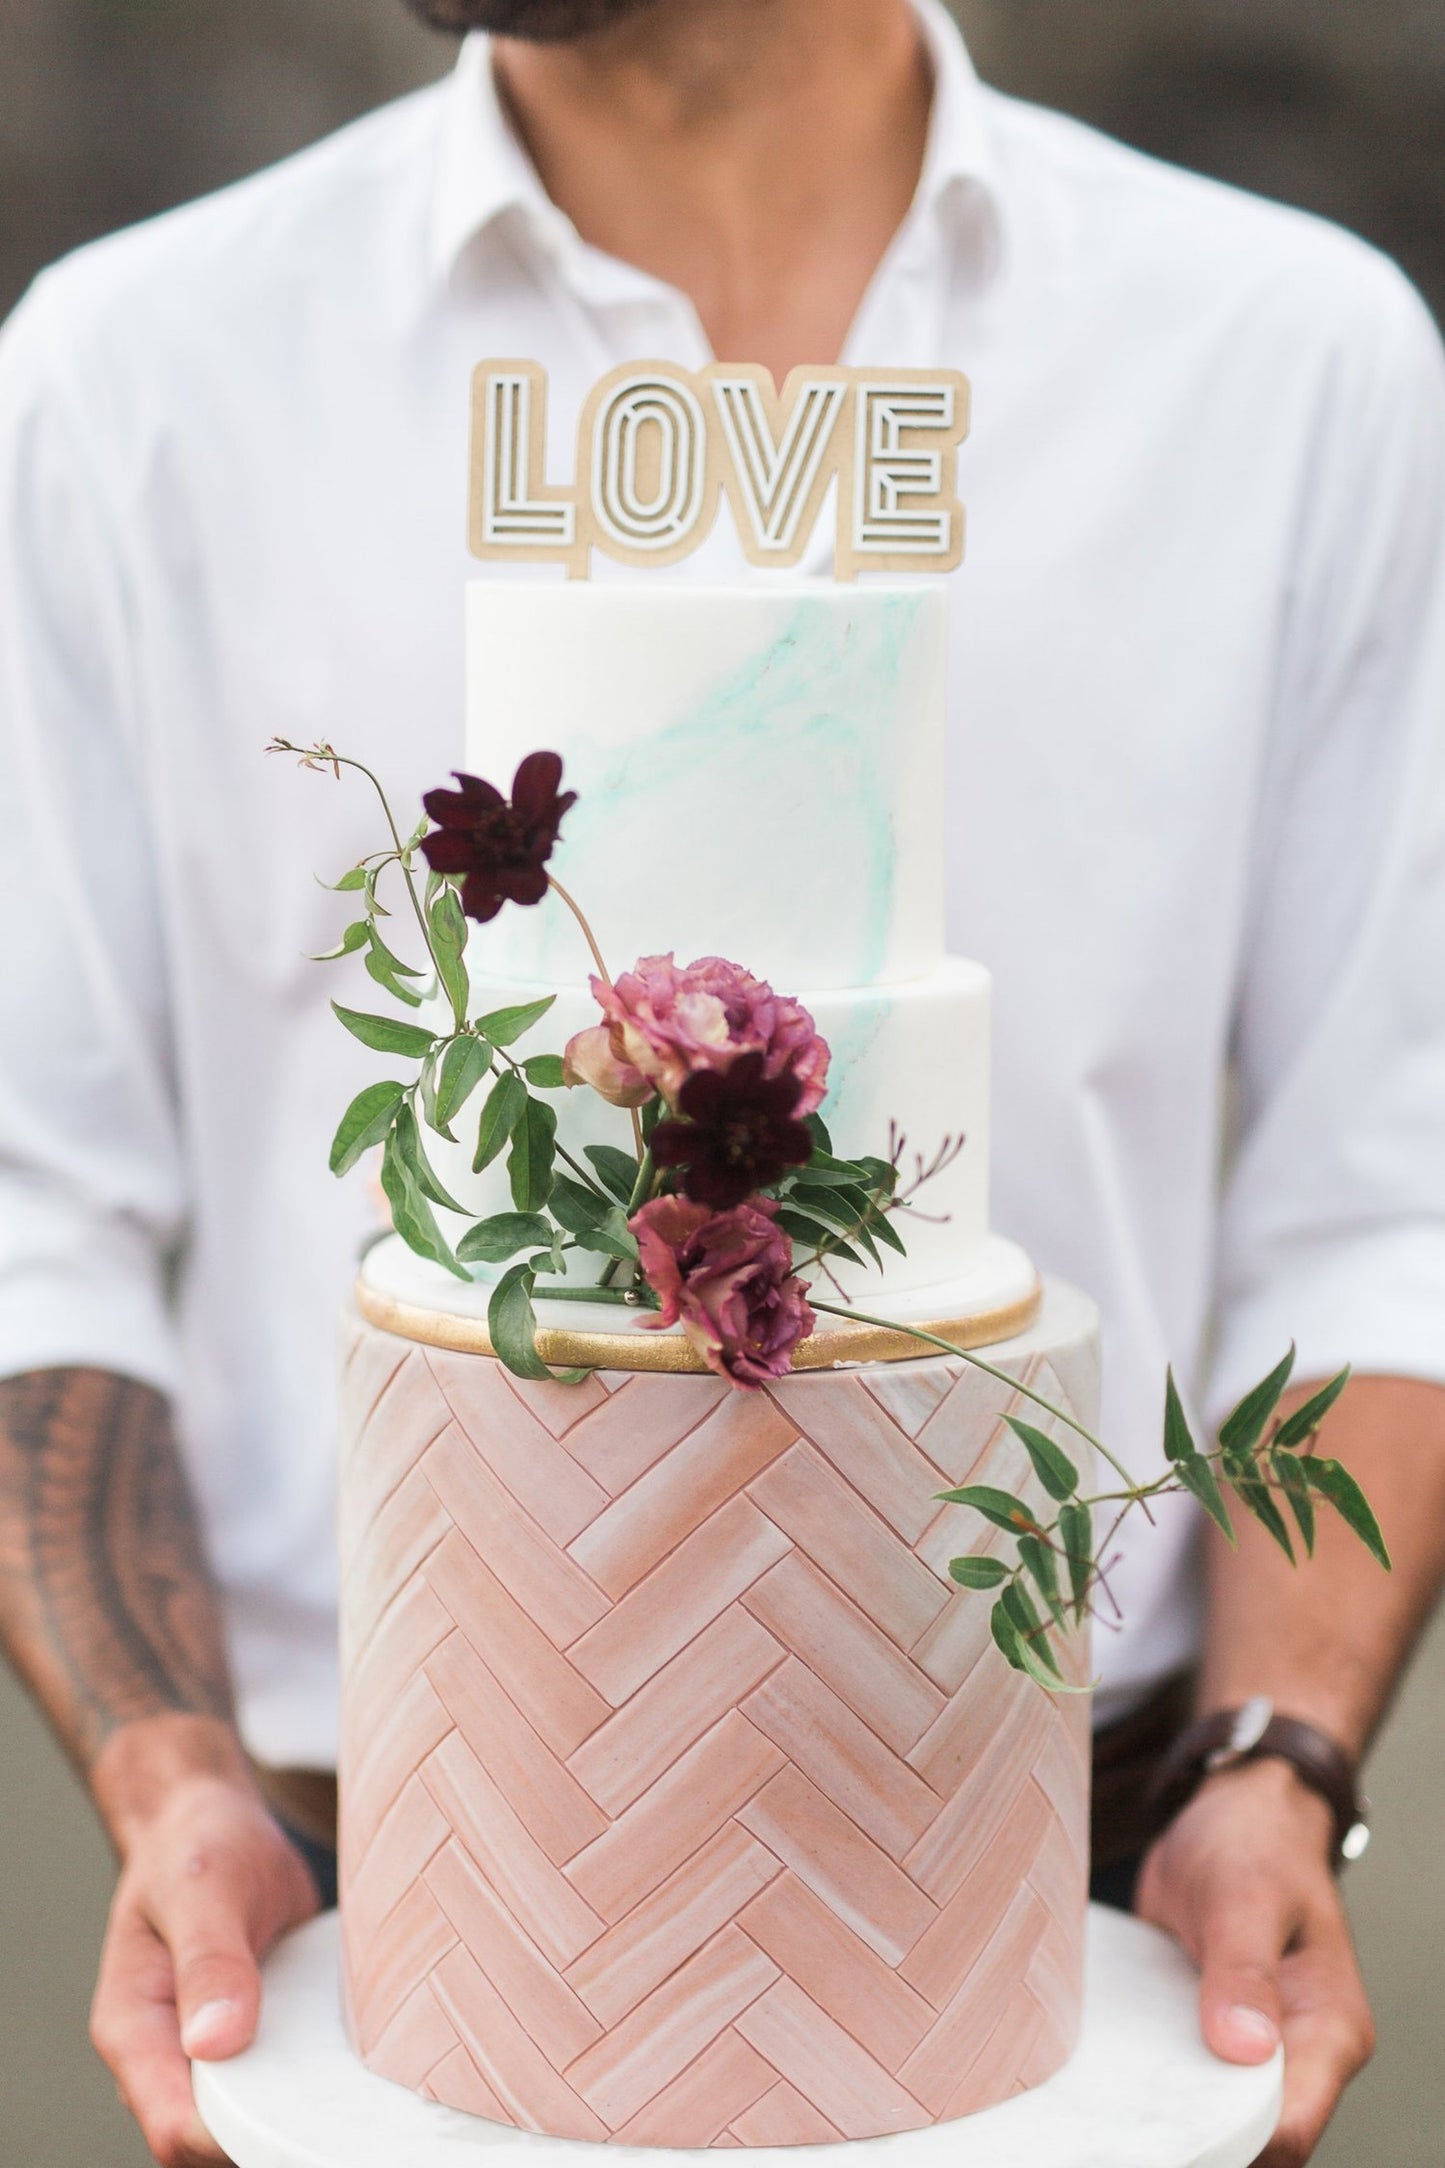 "LOVE" 2-Layered Cake Topper